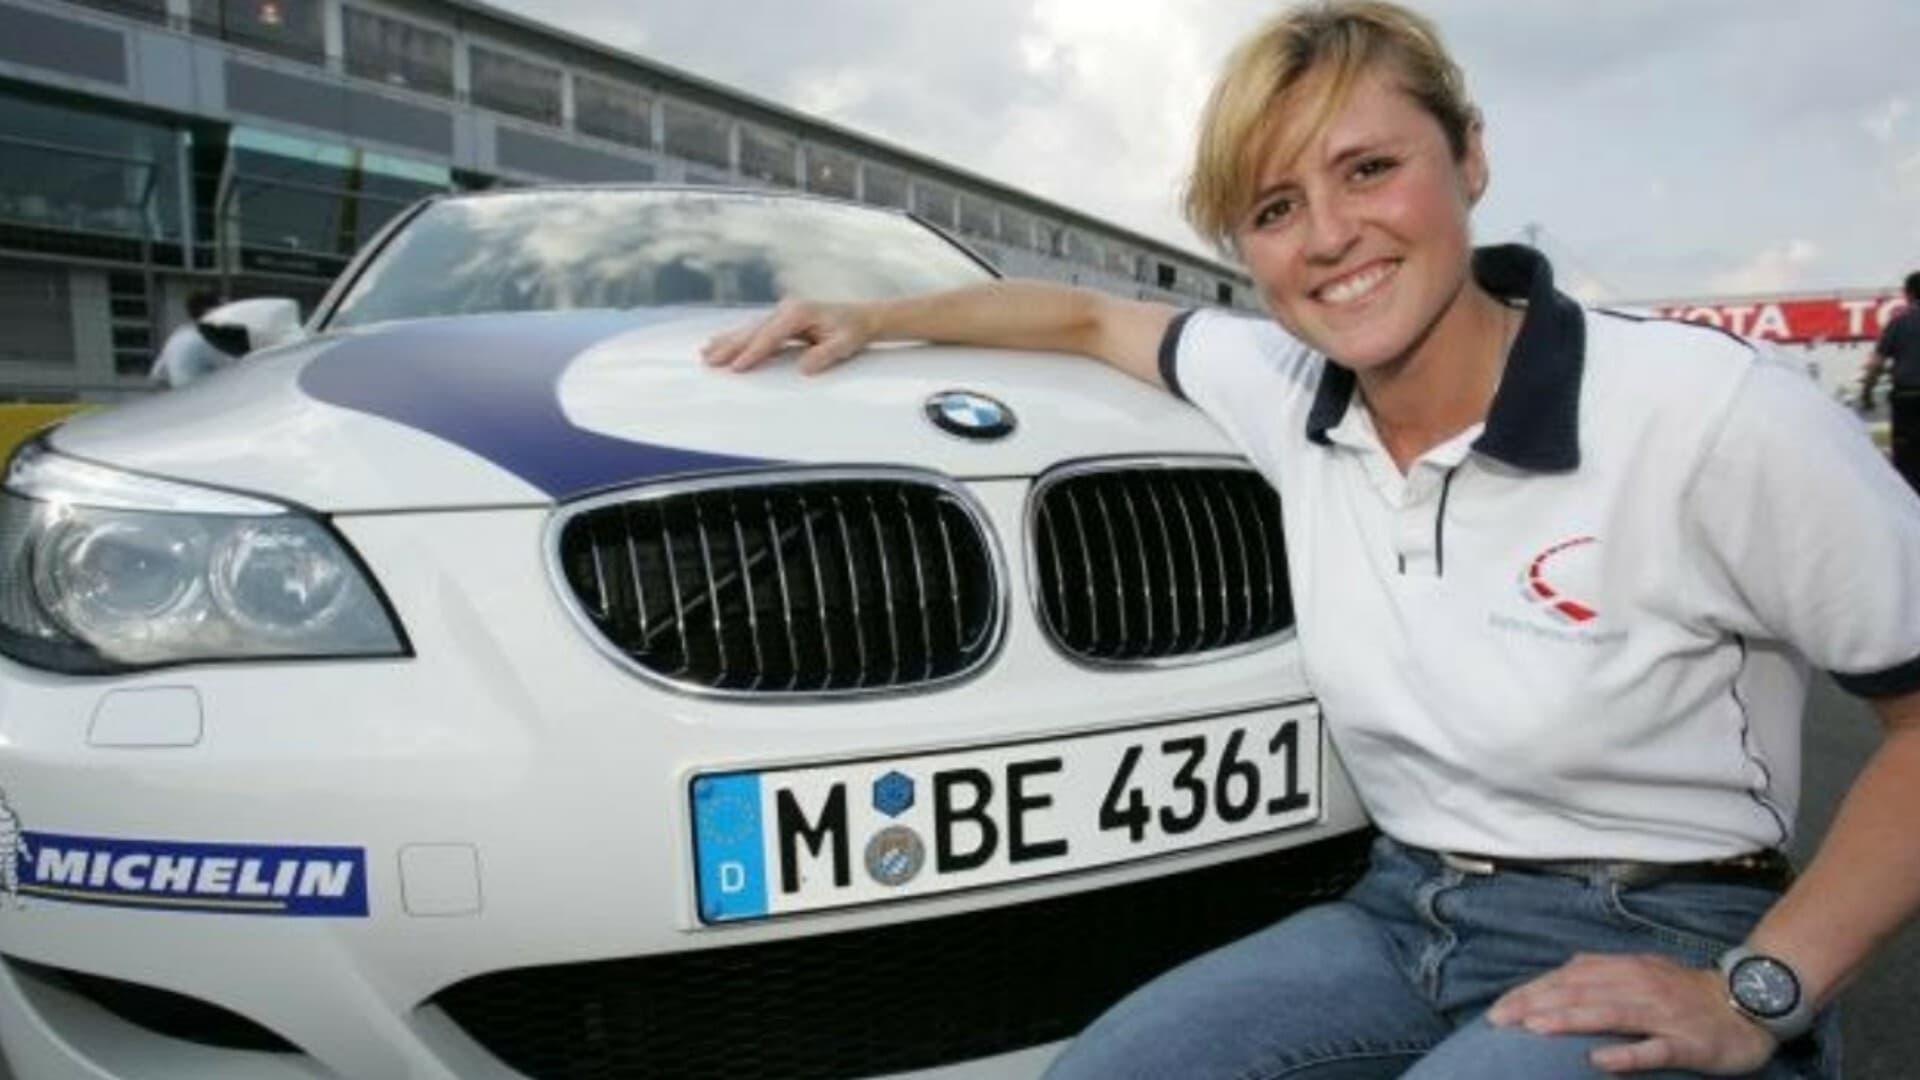 Top Gear: A Tribute to Sabine Schmitz backdrop